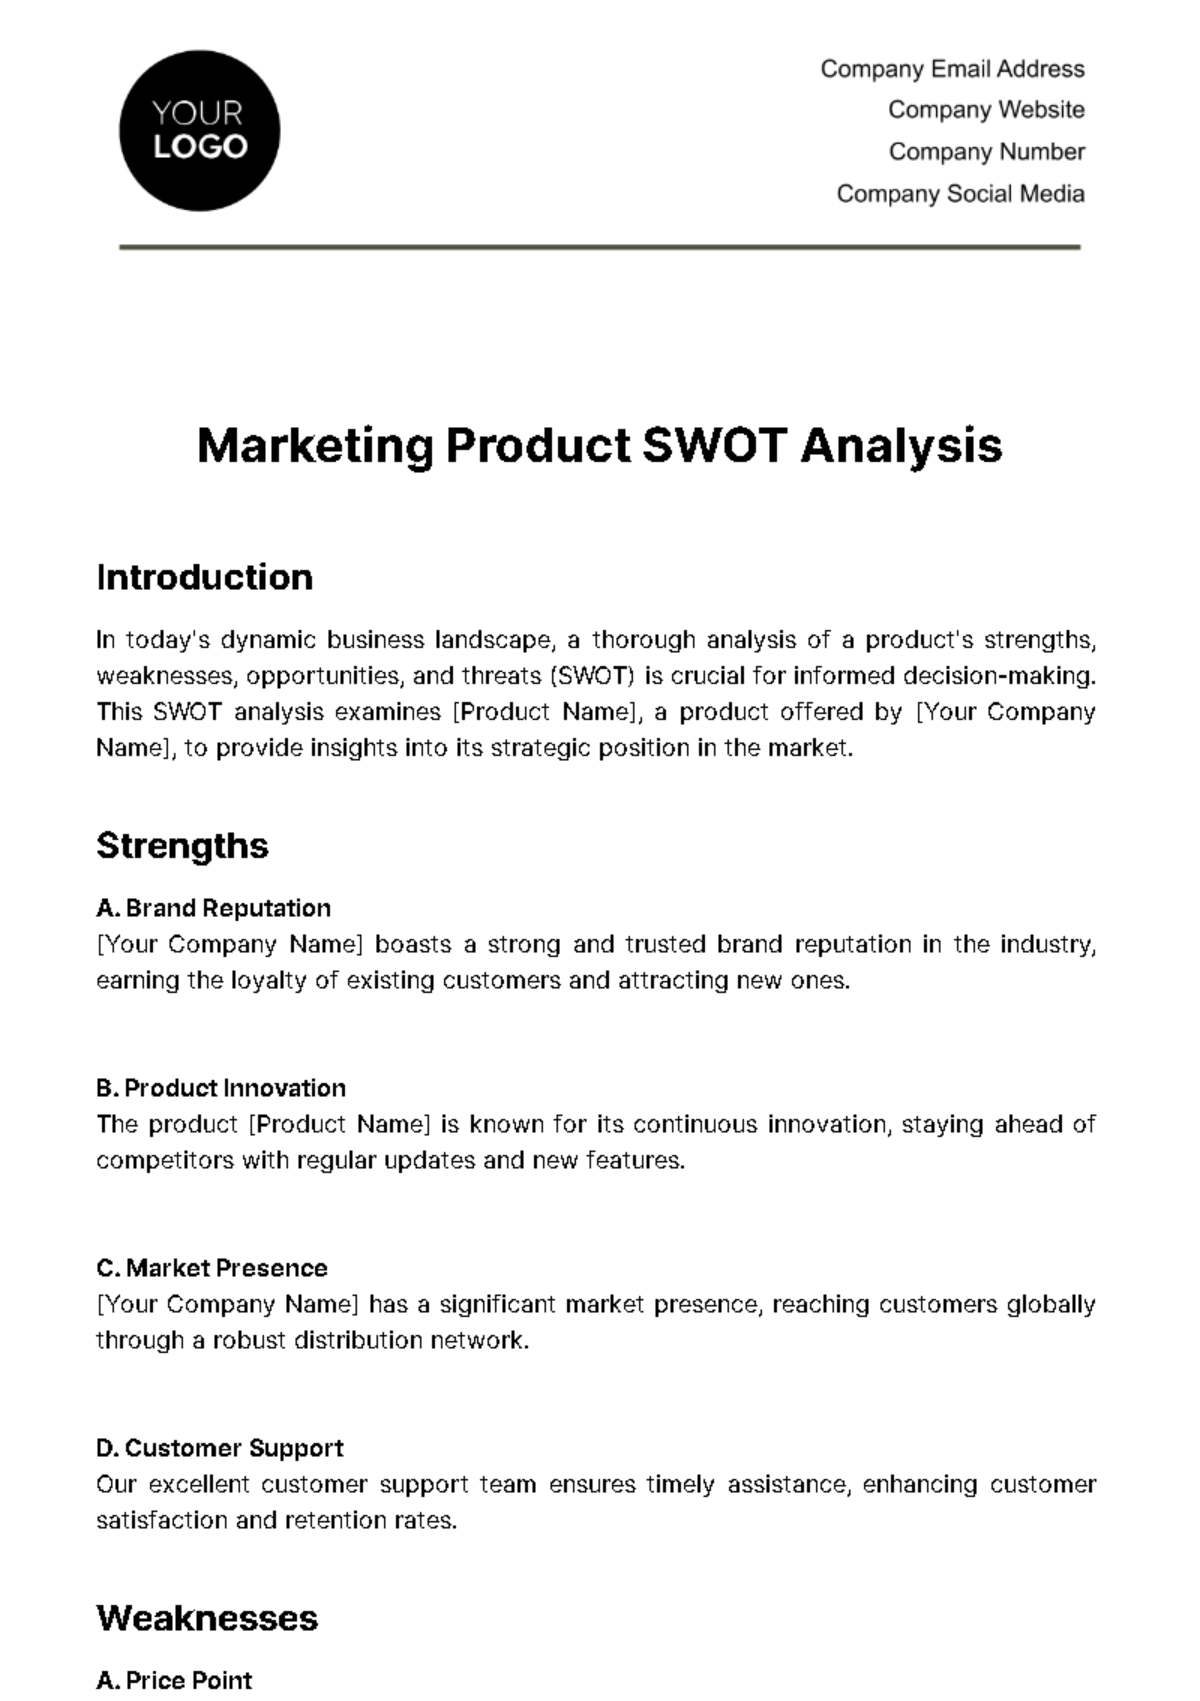 Free Marketing Product SWOT Analysis Template